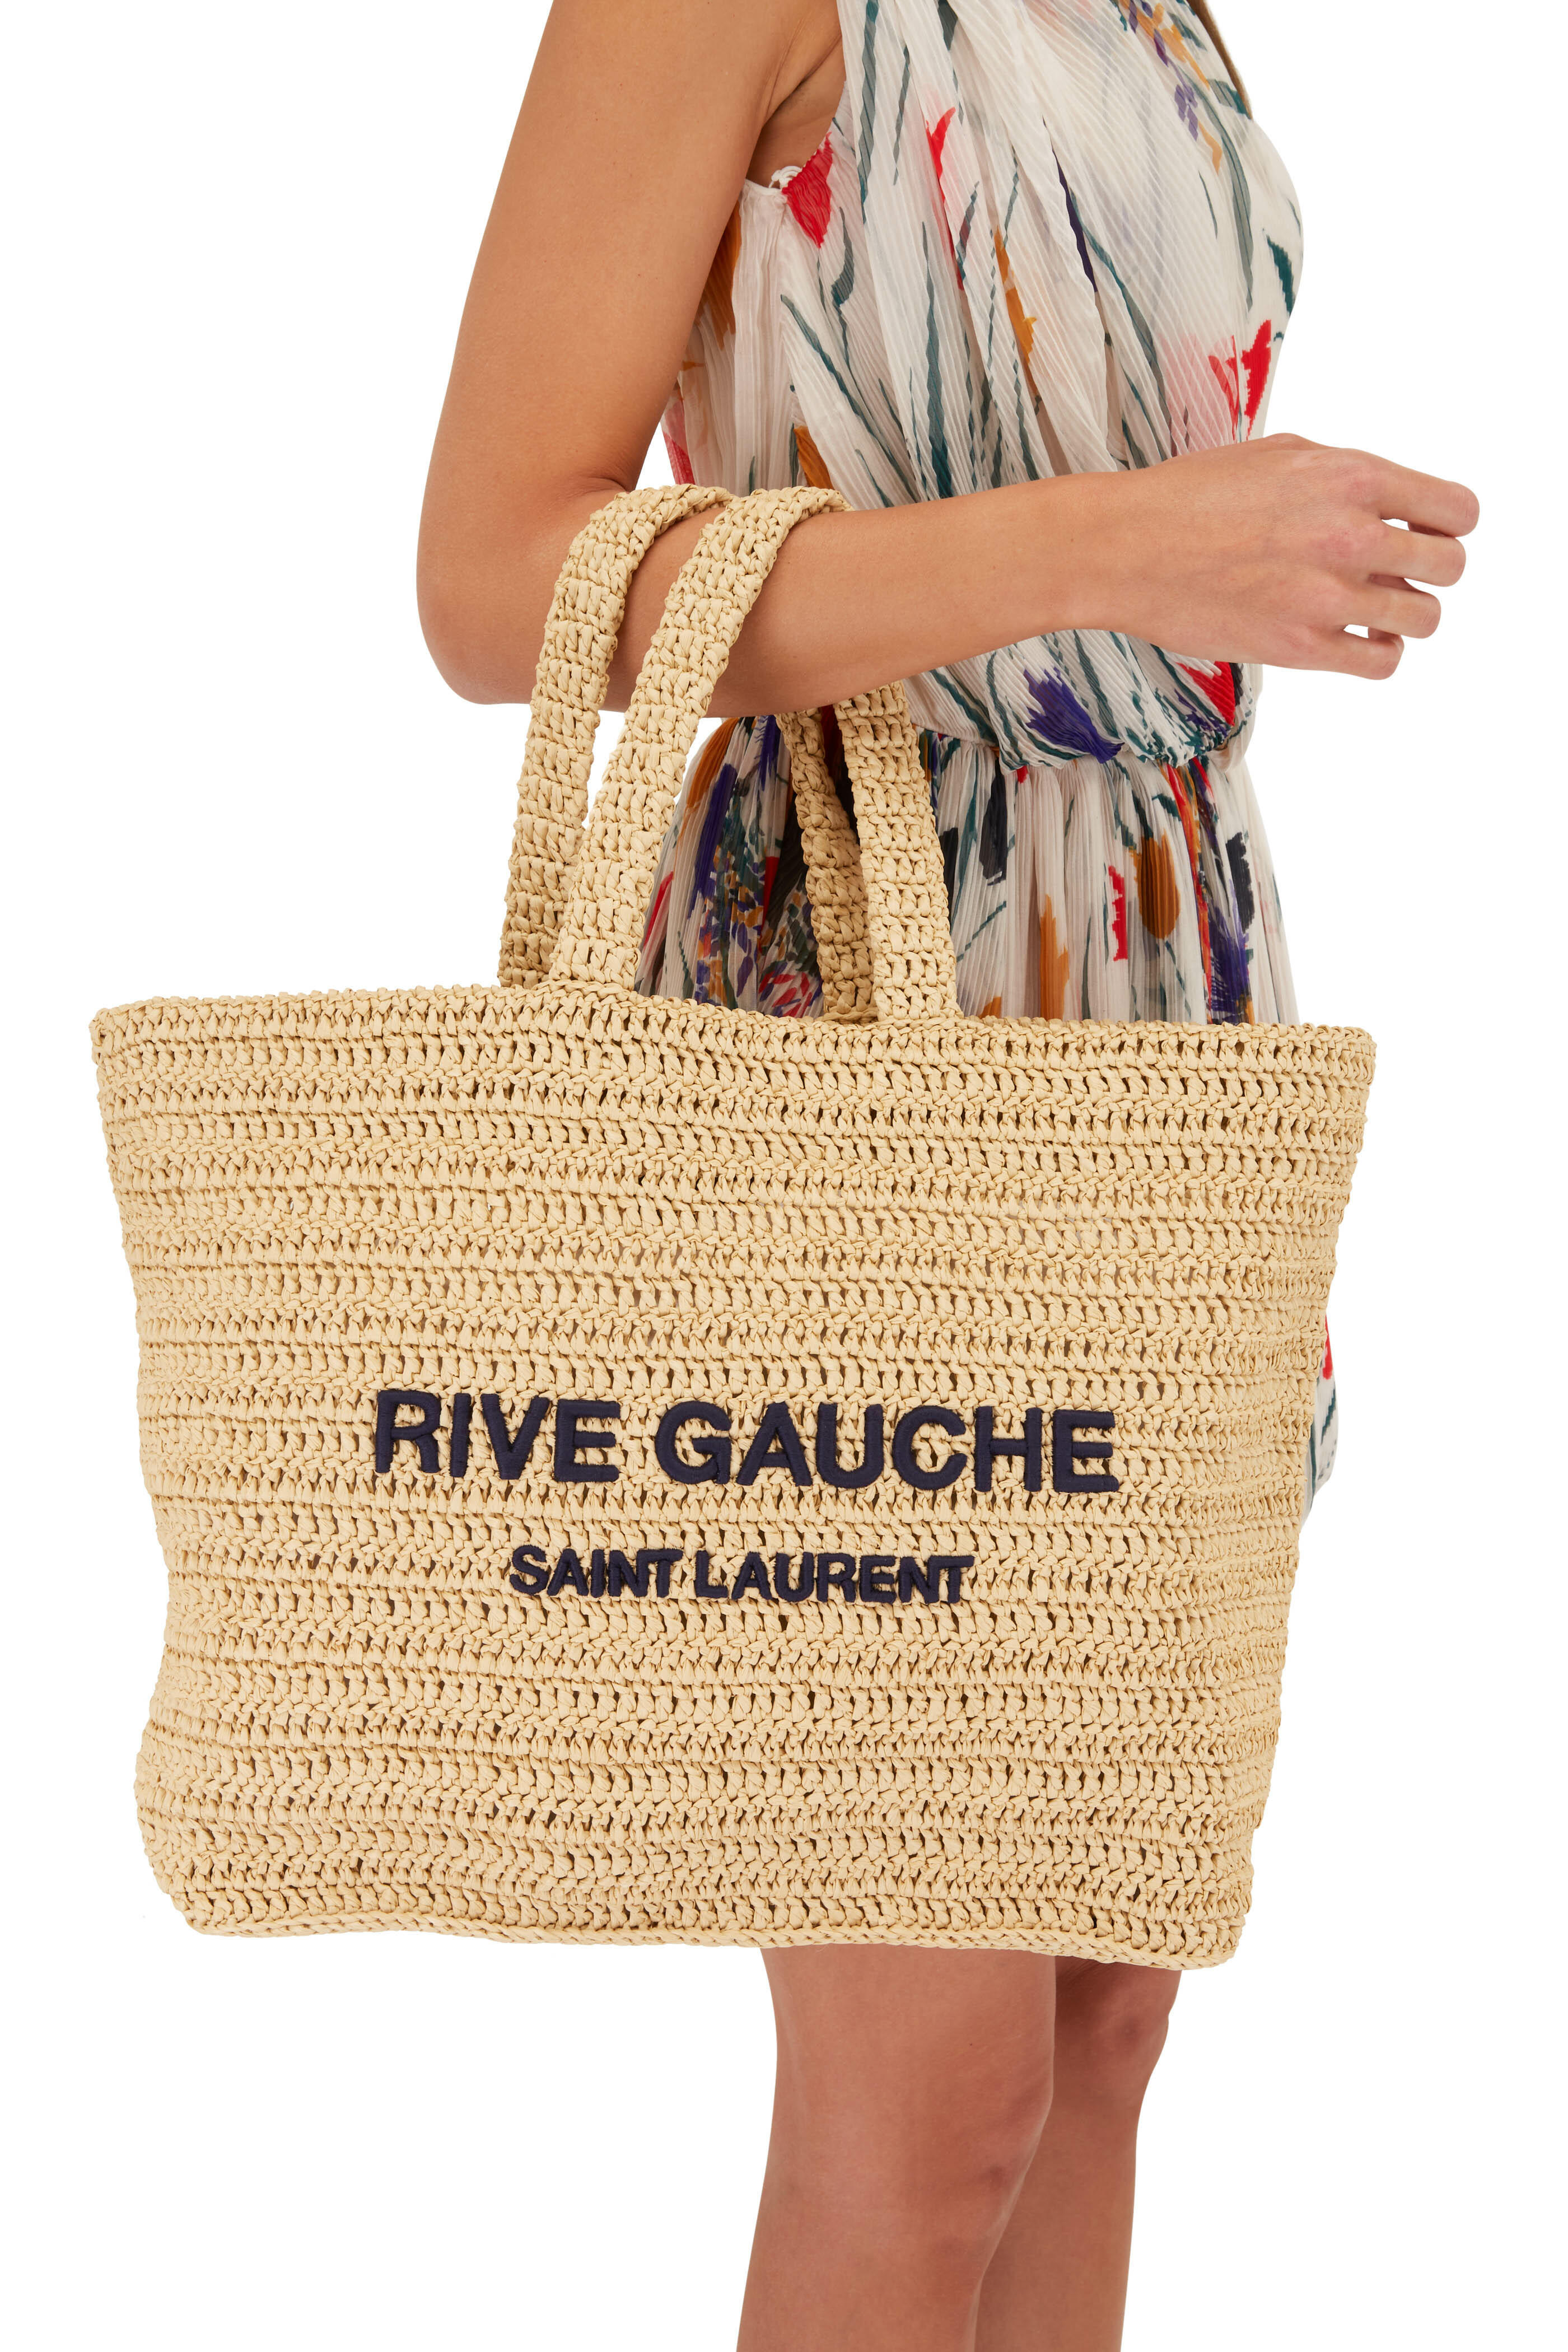 SAINT LAURENT: tote bags for woman - Natural